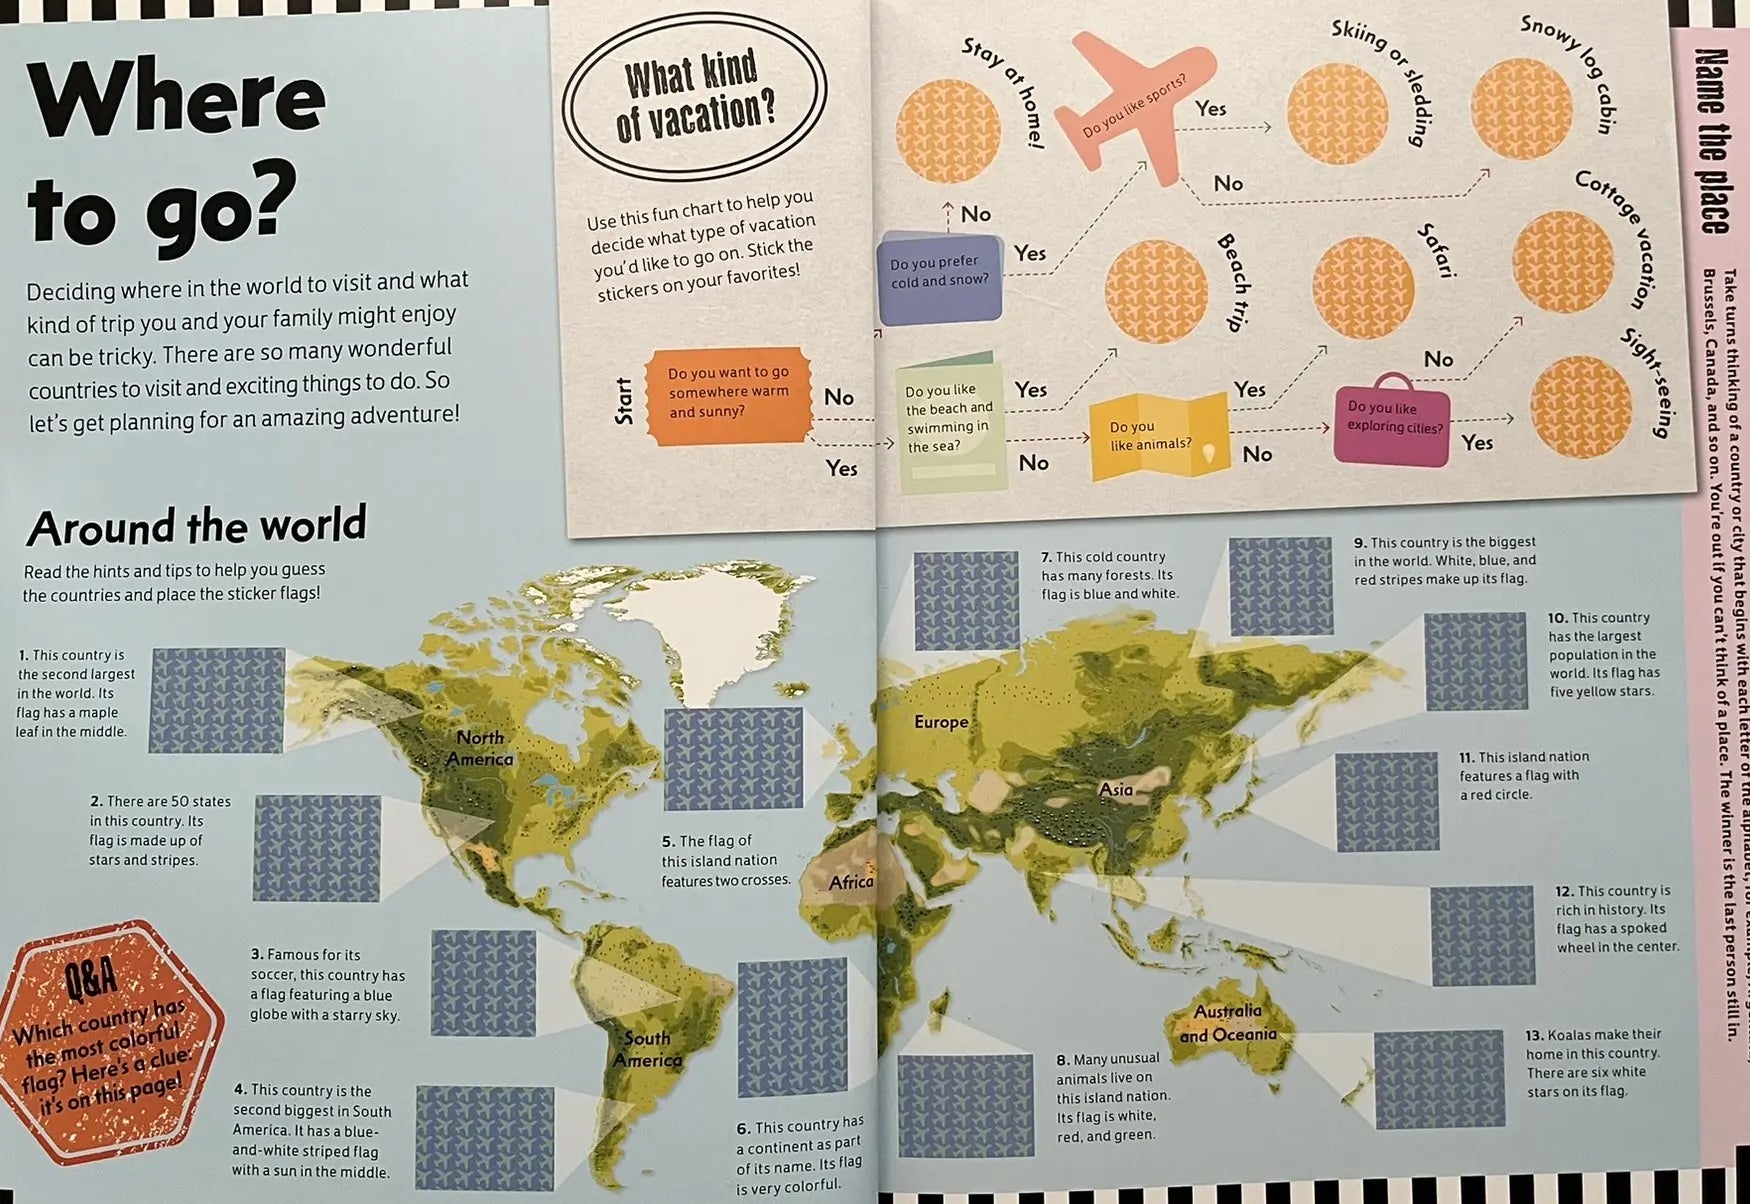 Sticker Encyclopedia Around the World